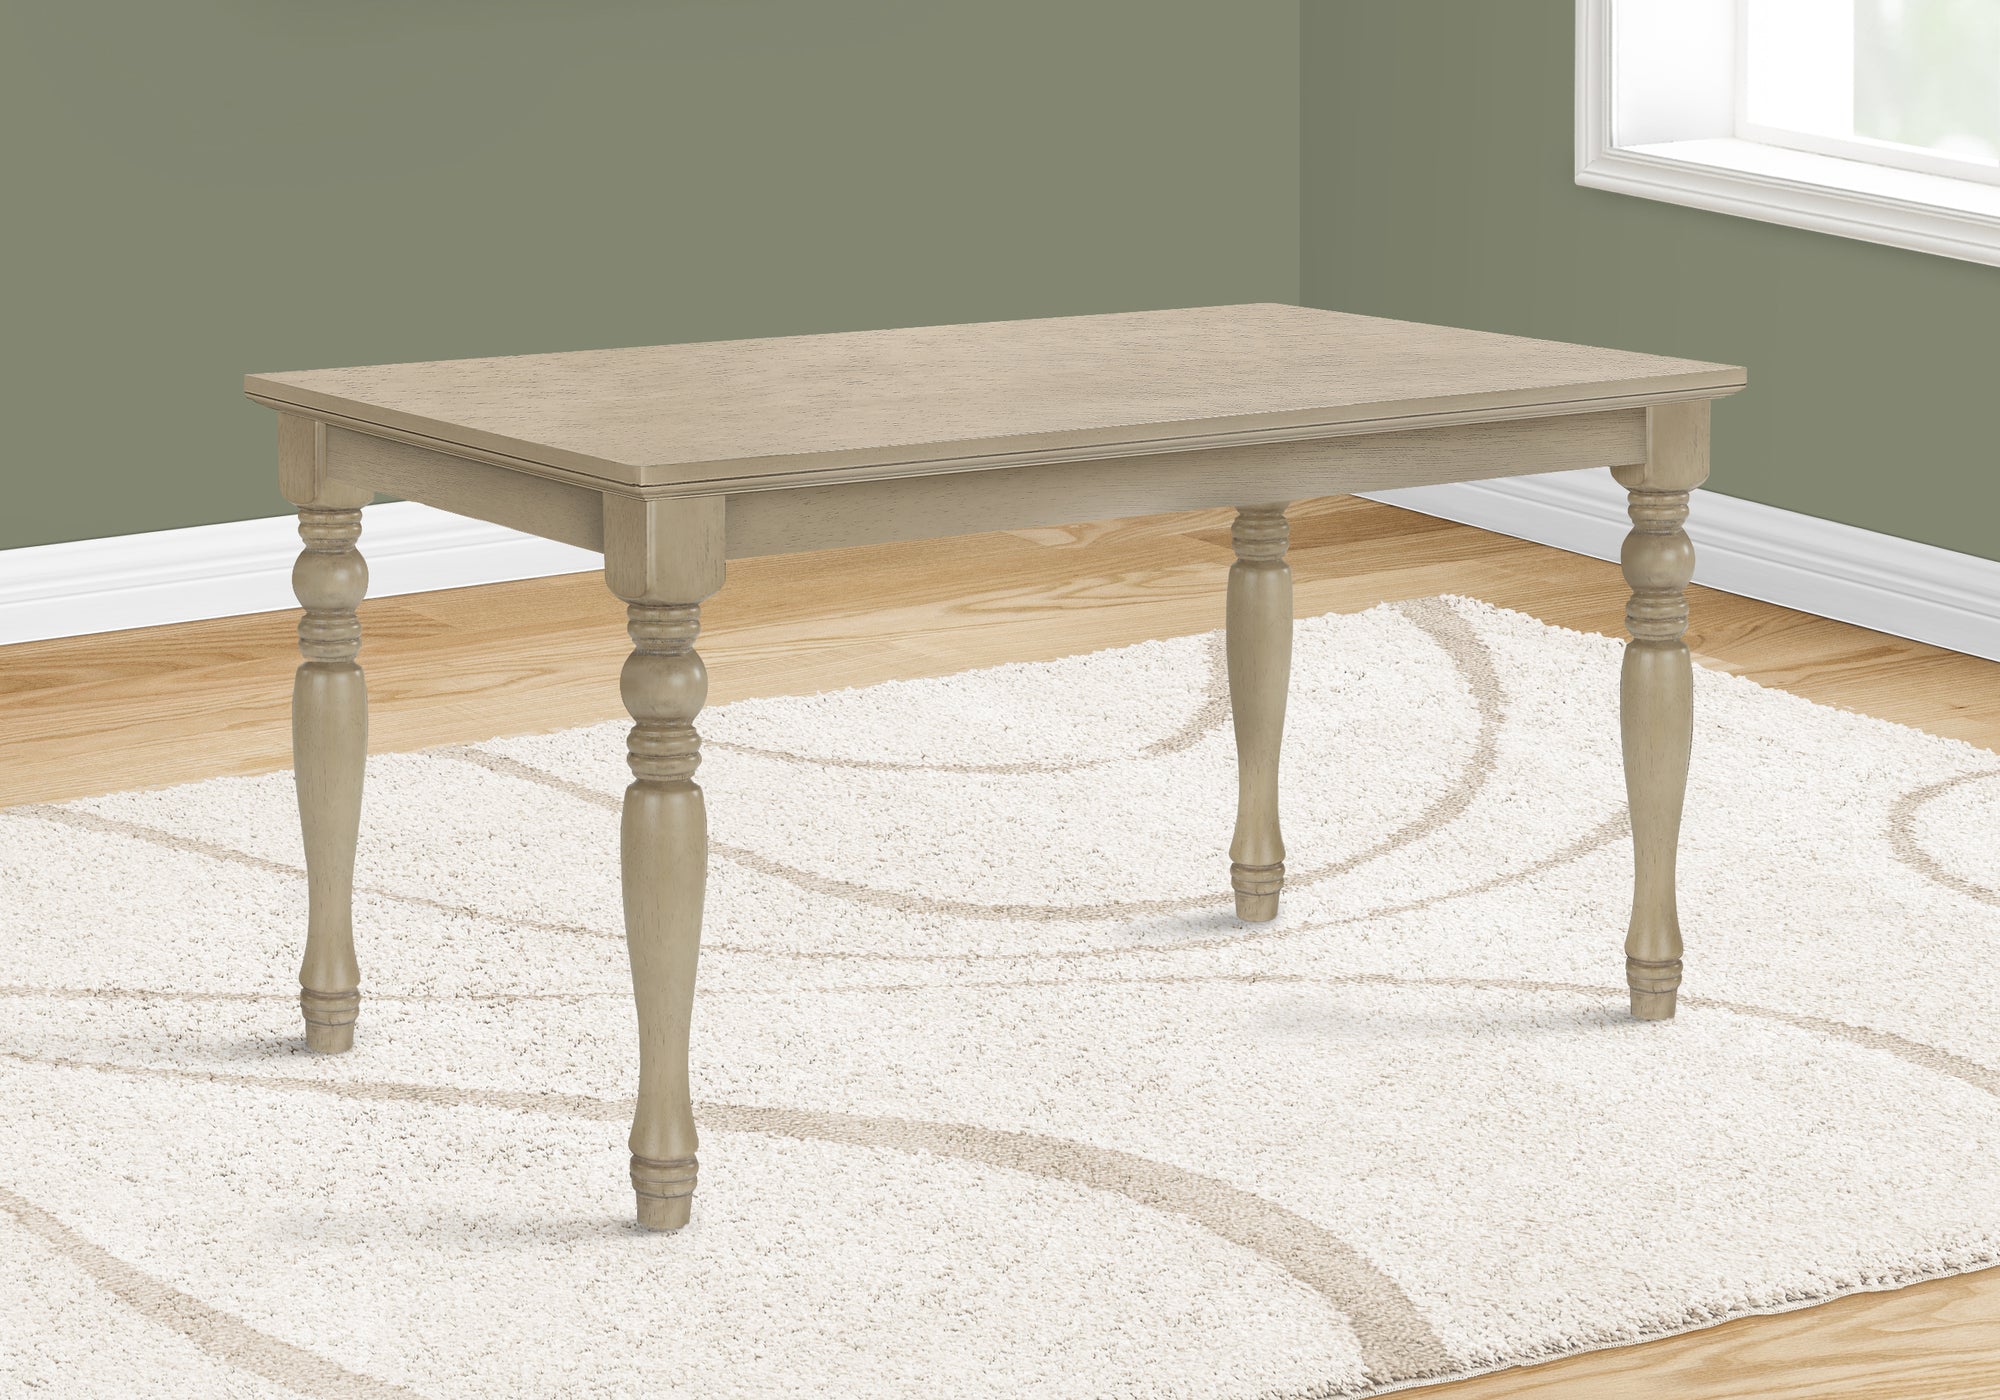 MN-391390    Dining Table, 60" Rectangular, Veneer Top, Solid Wood Legs, Dining Room, Kitchen, Antique Grey Veneer, Wood Legs, Transitional